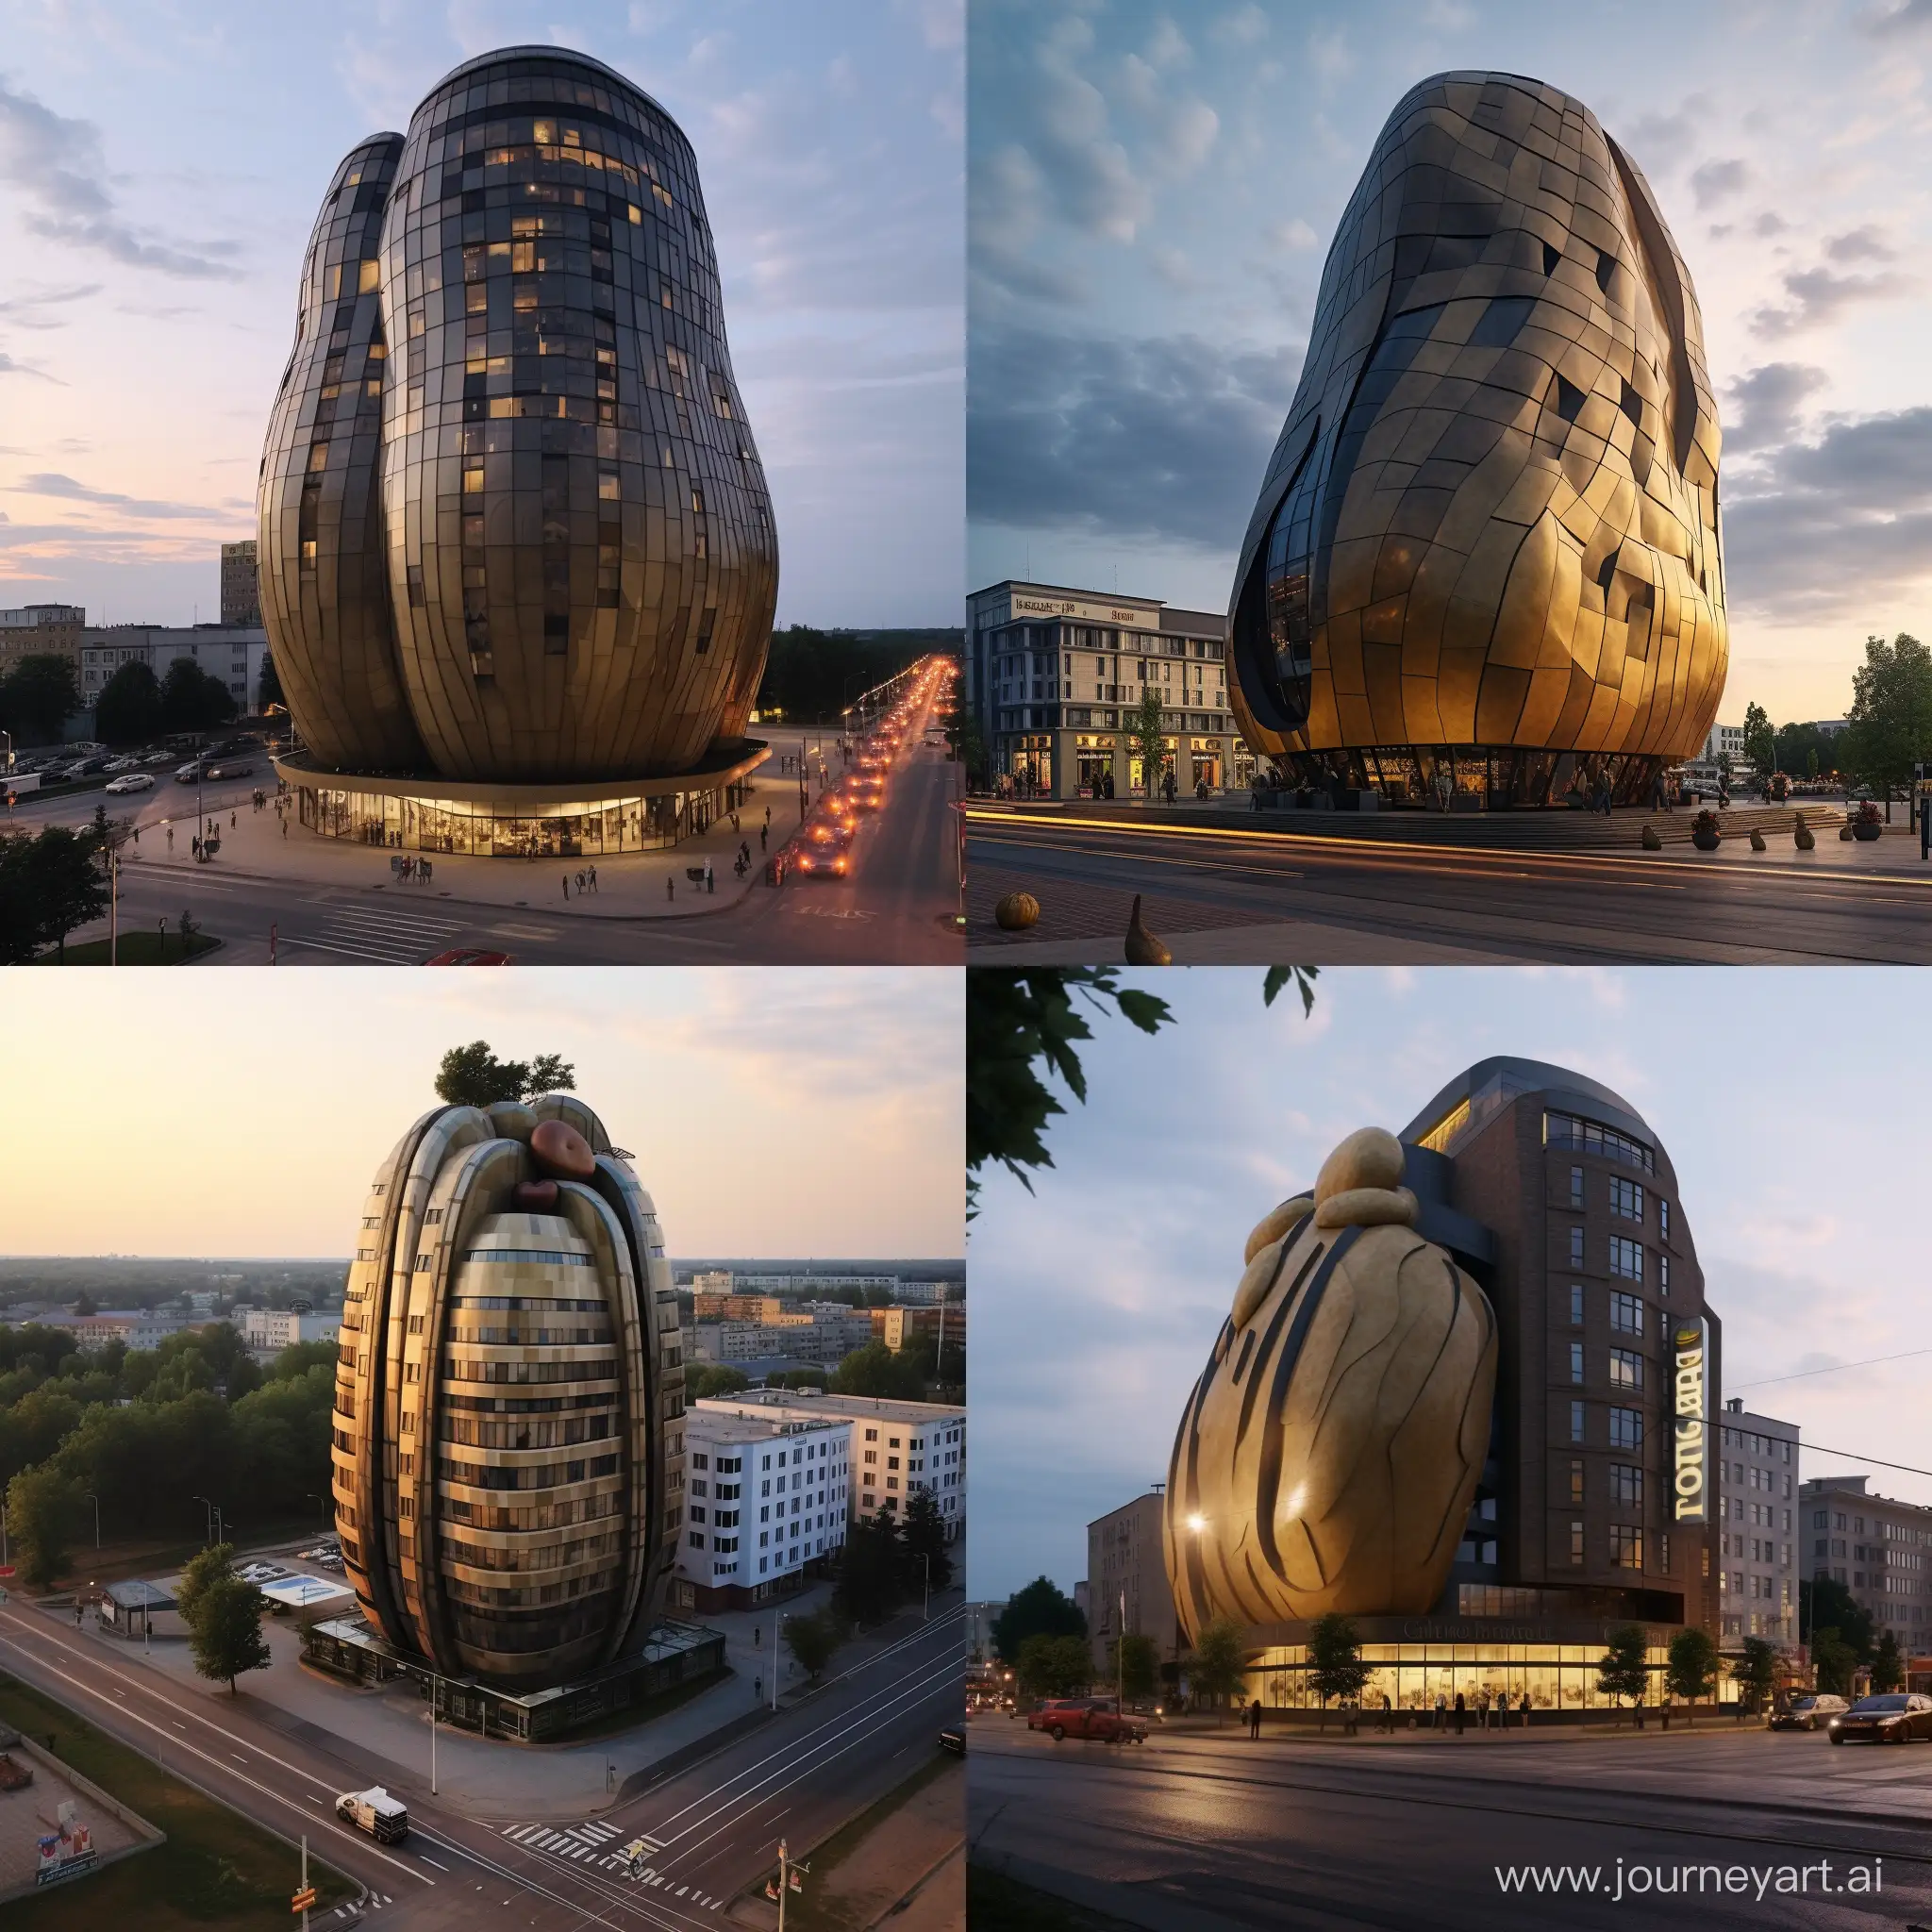 PotatoShaped-20Story-Building-in-Belarus-Square